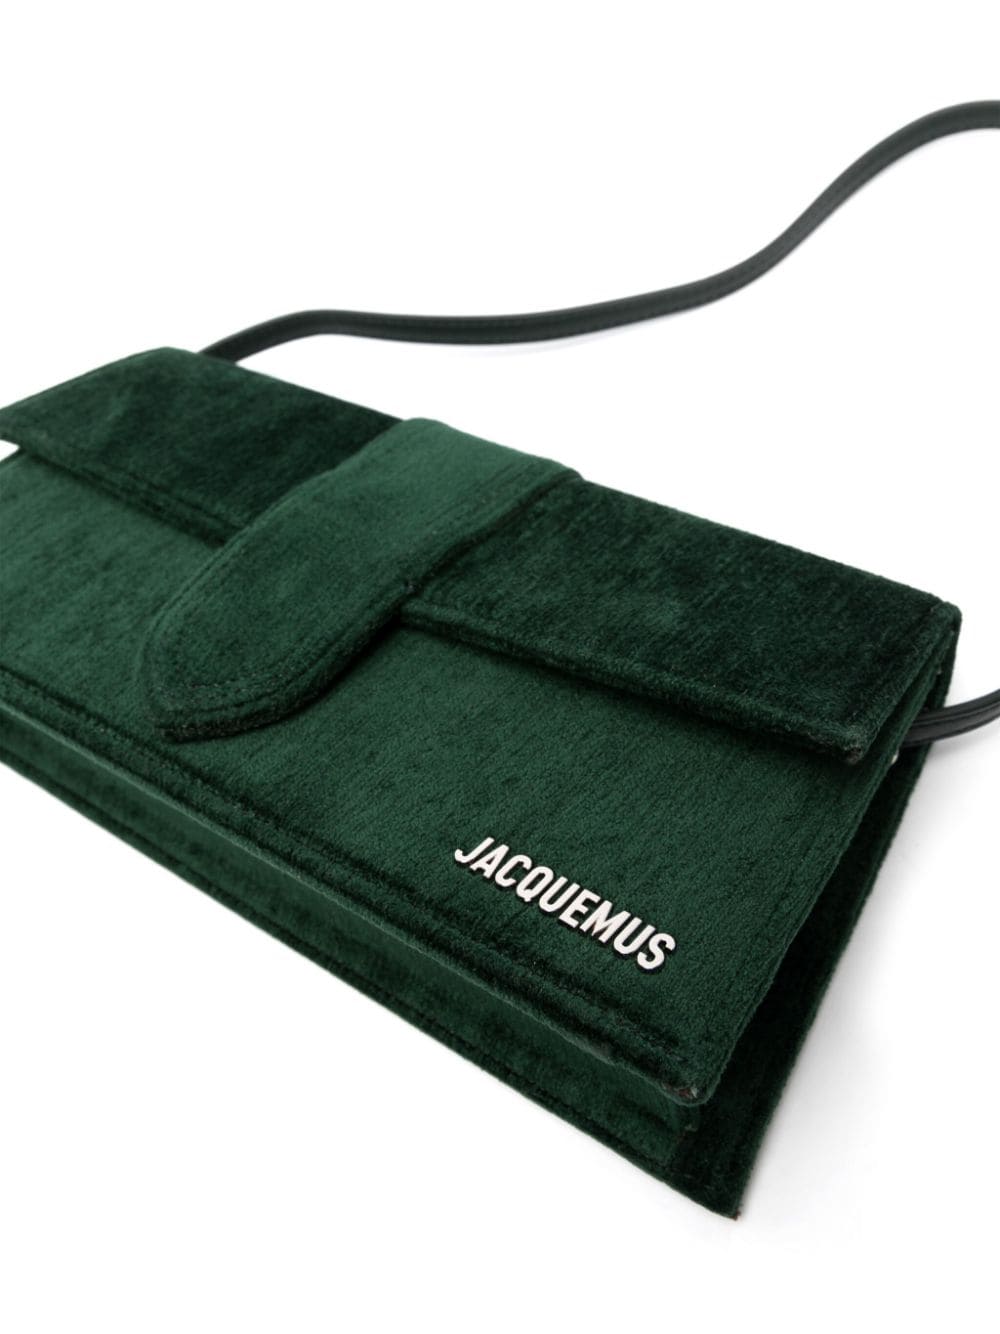 Jacquemus Long bag bambino tessuto verde